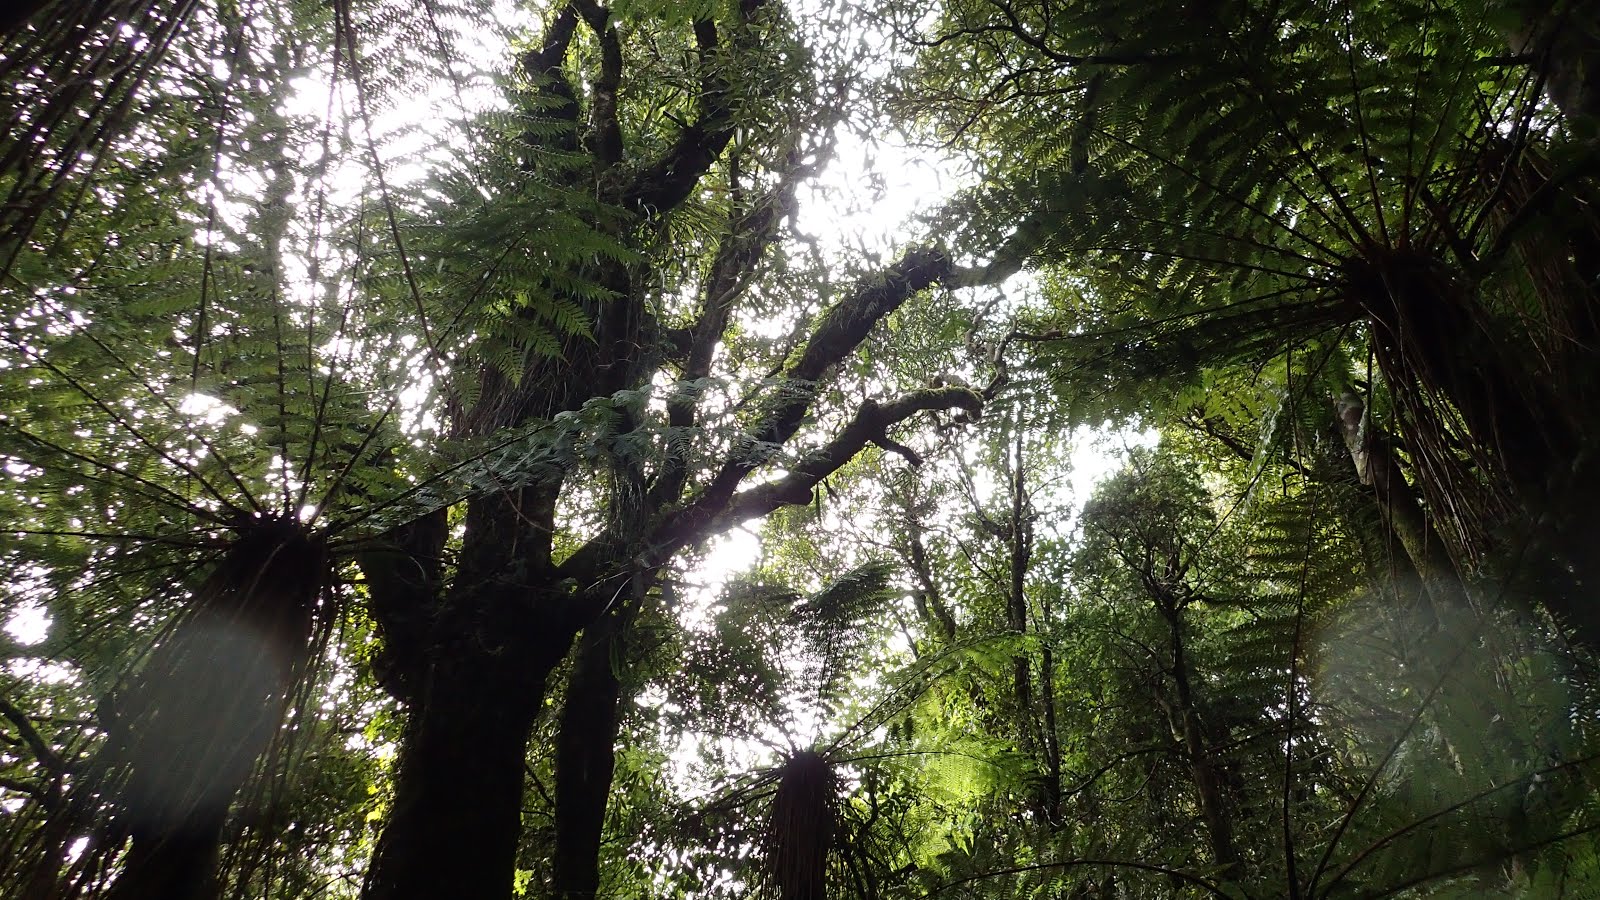 Pukaka walk: Ferns and trees and raindrops